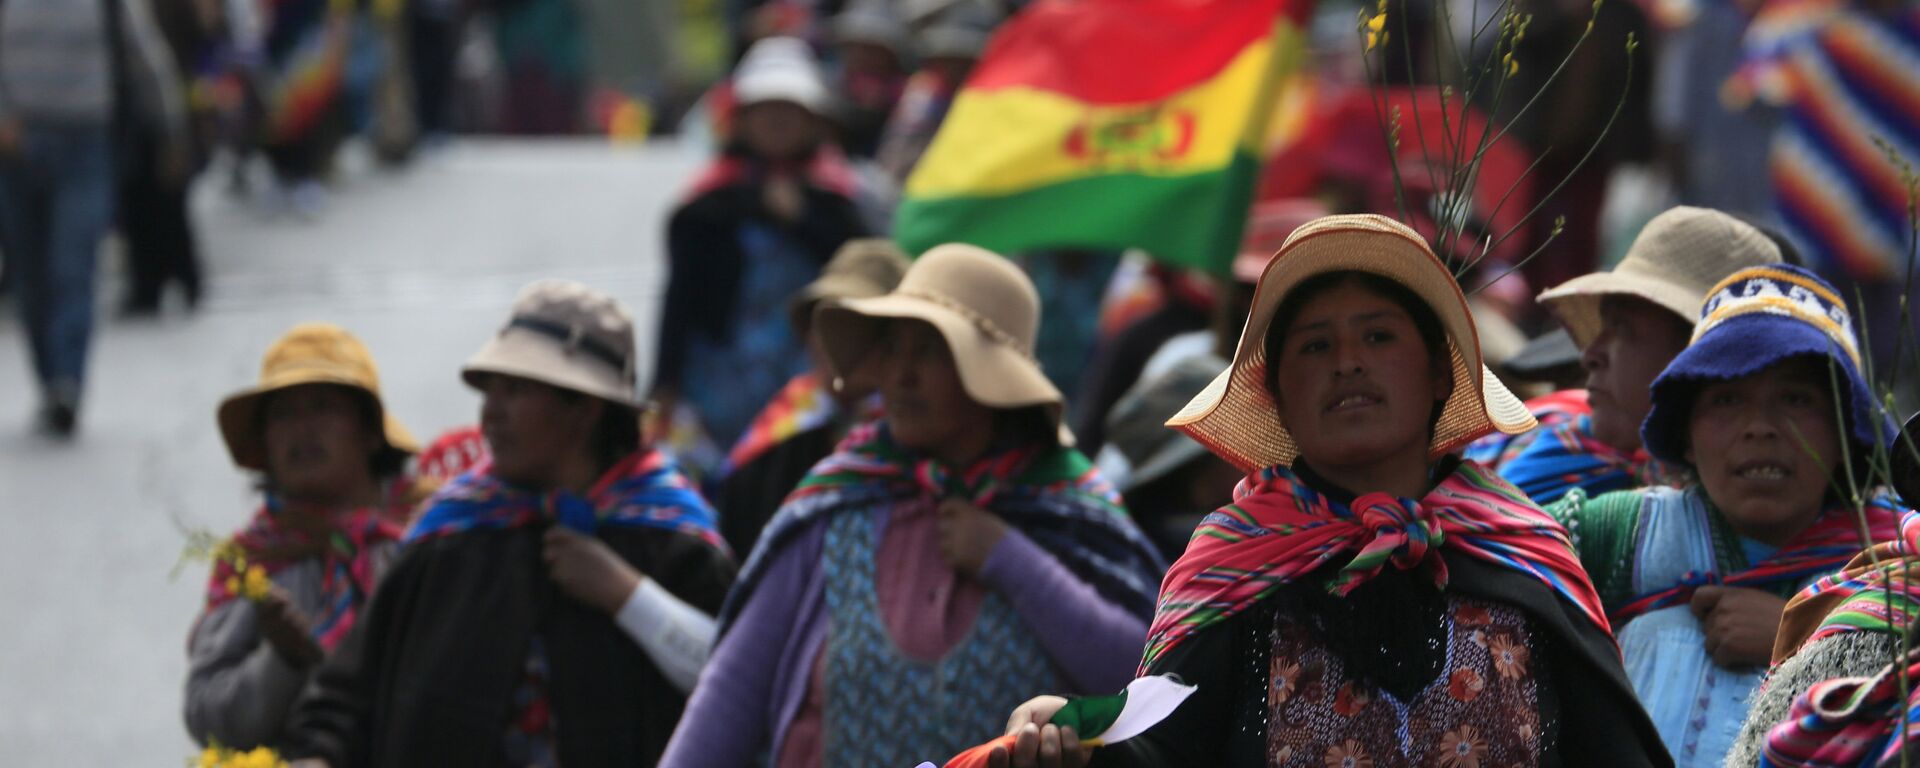 Mujeres indígenas en Bolivia - Sputnik Mundo, 1920, 19.01.2021